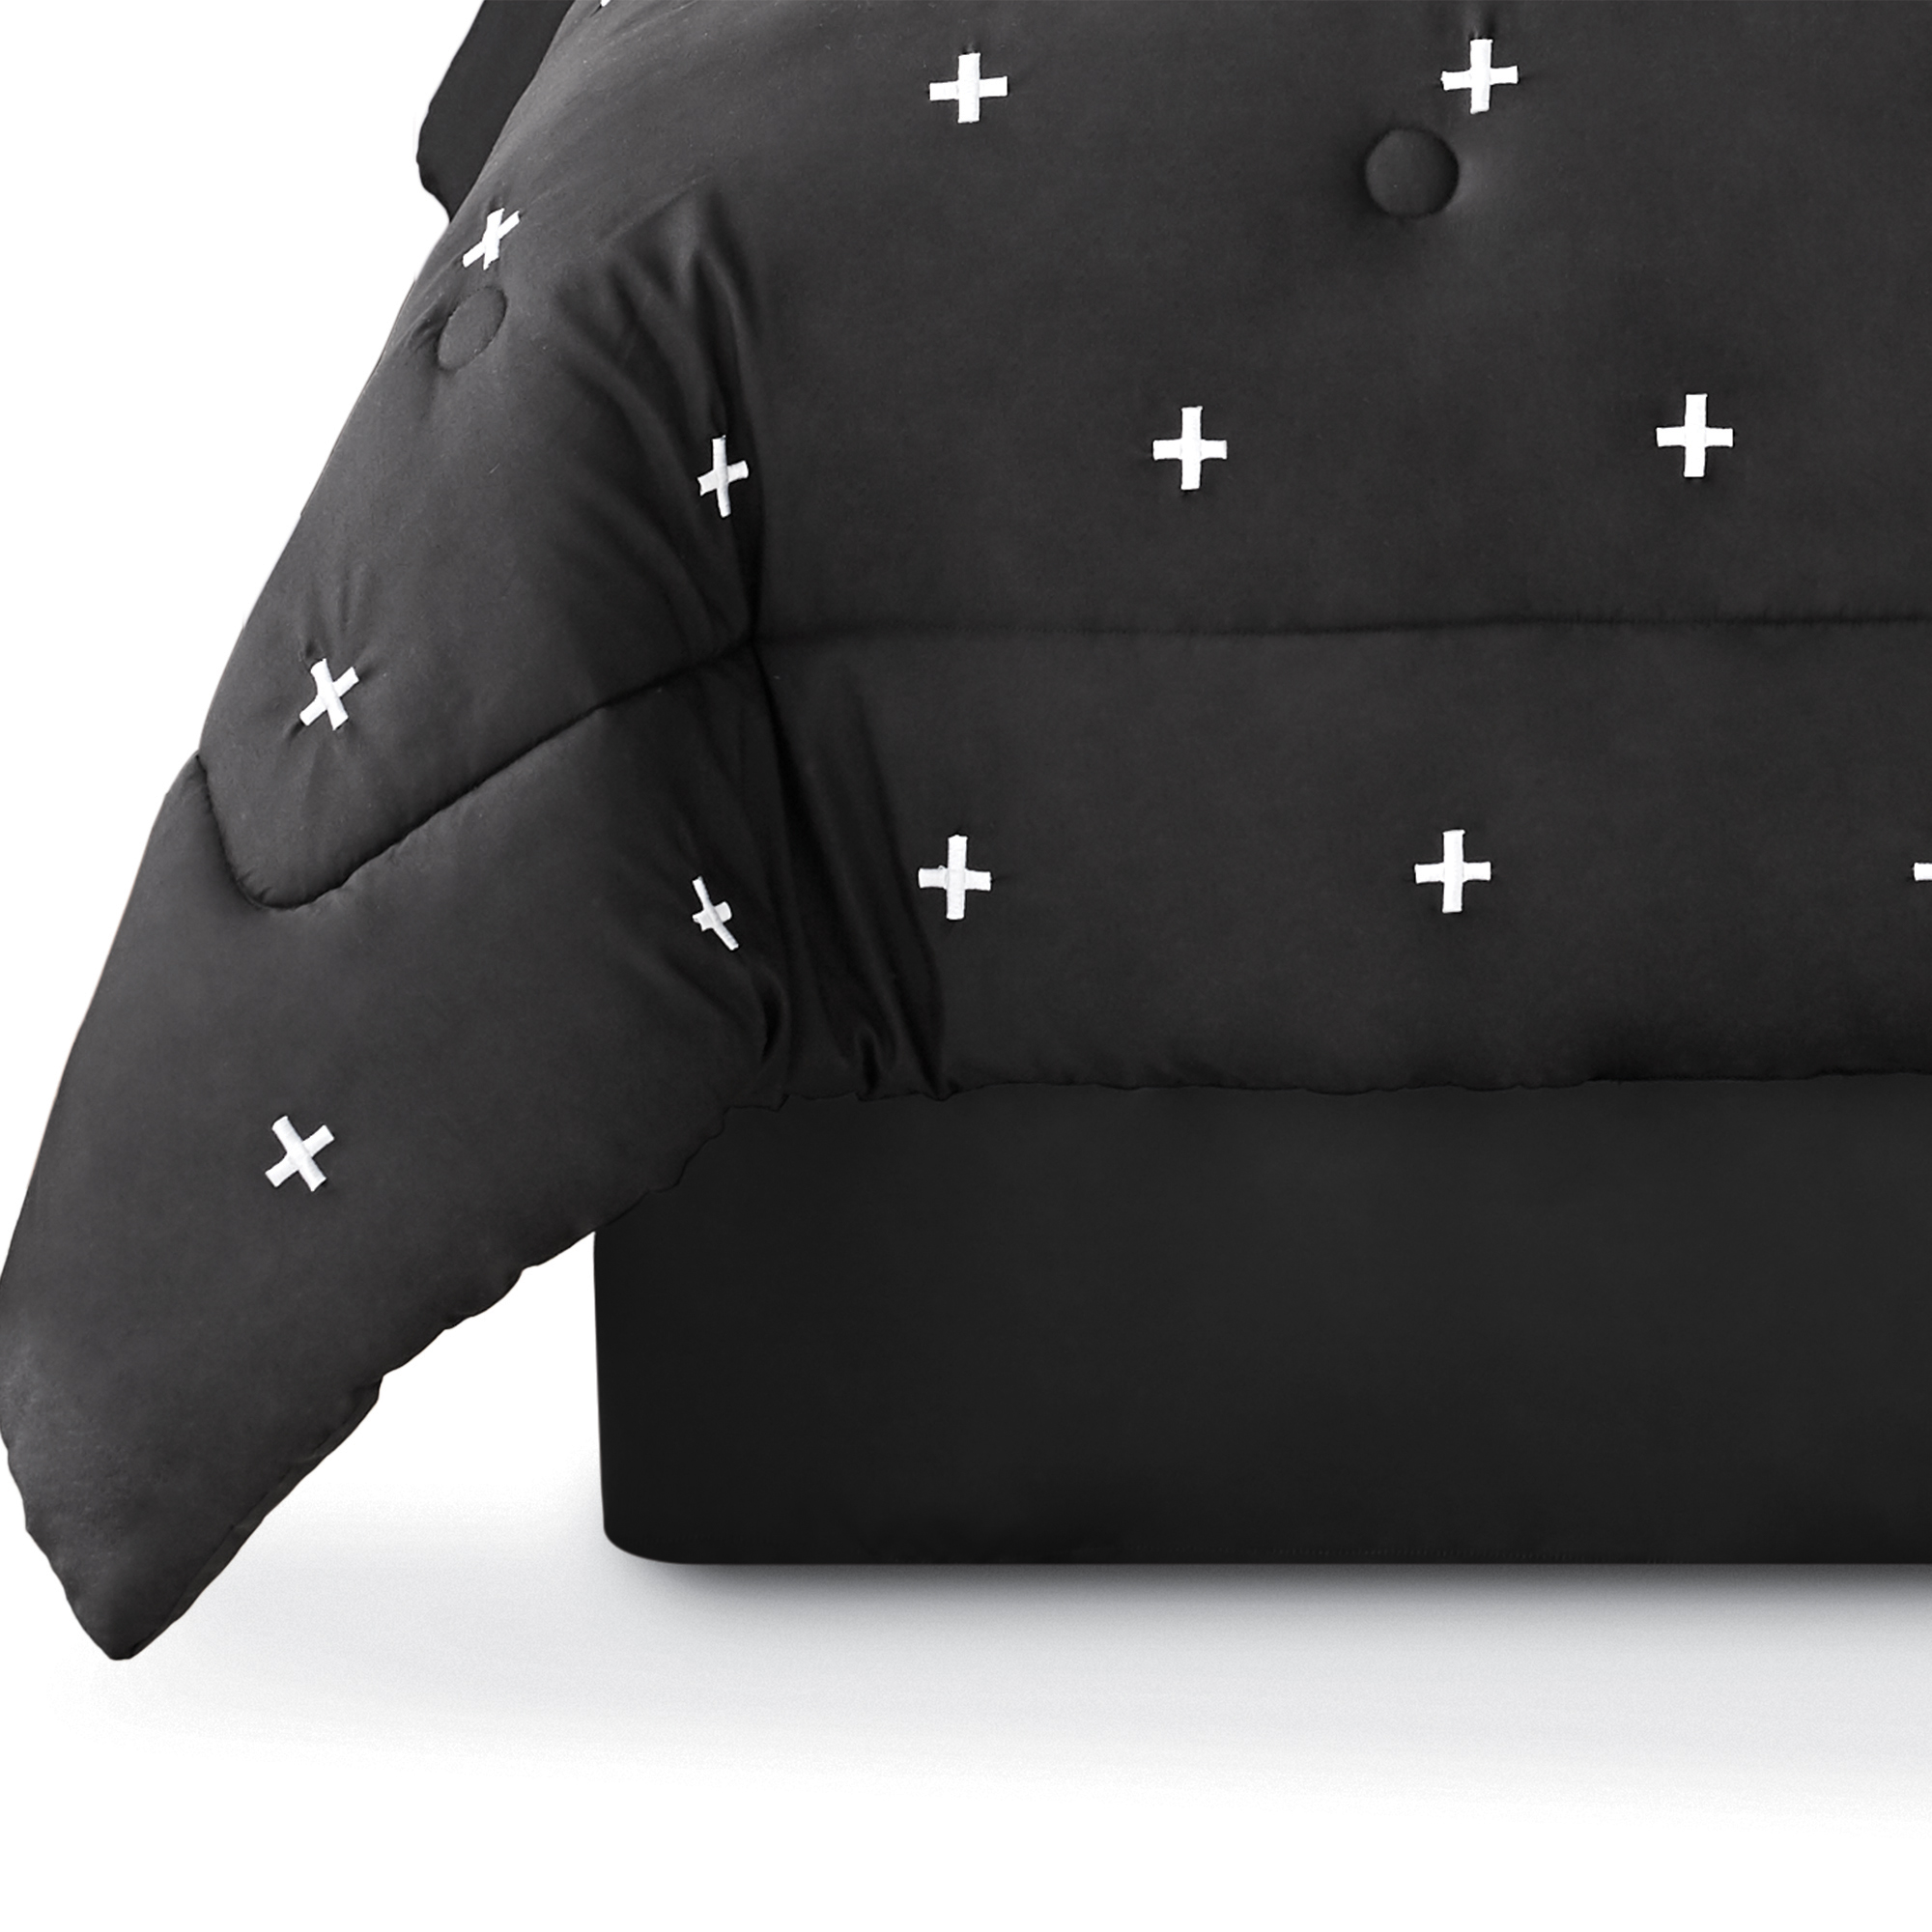 Mainstays 7-Piece Black Embroidered Bedding Comforter Set, King - image 5 of 6